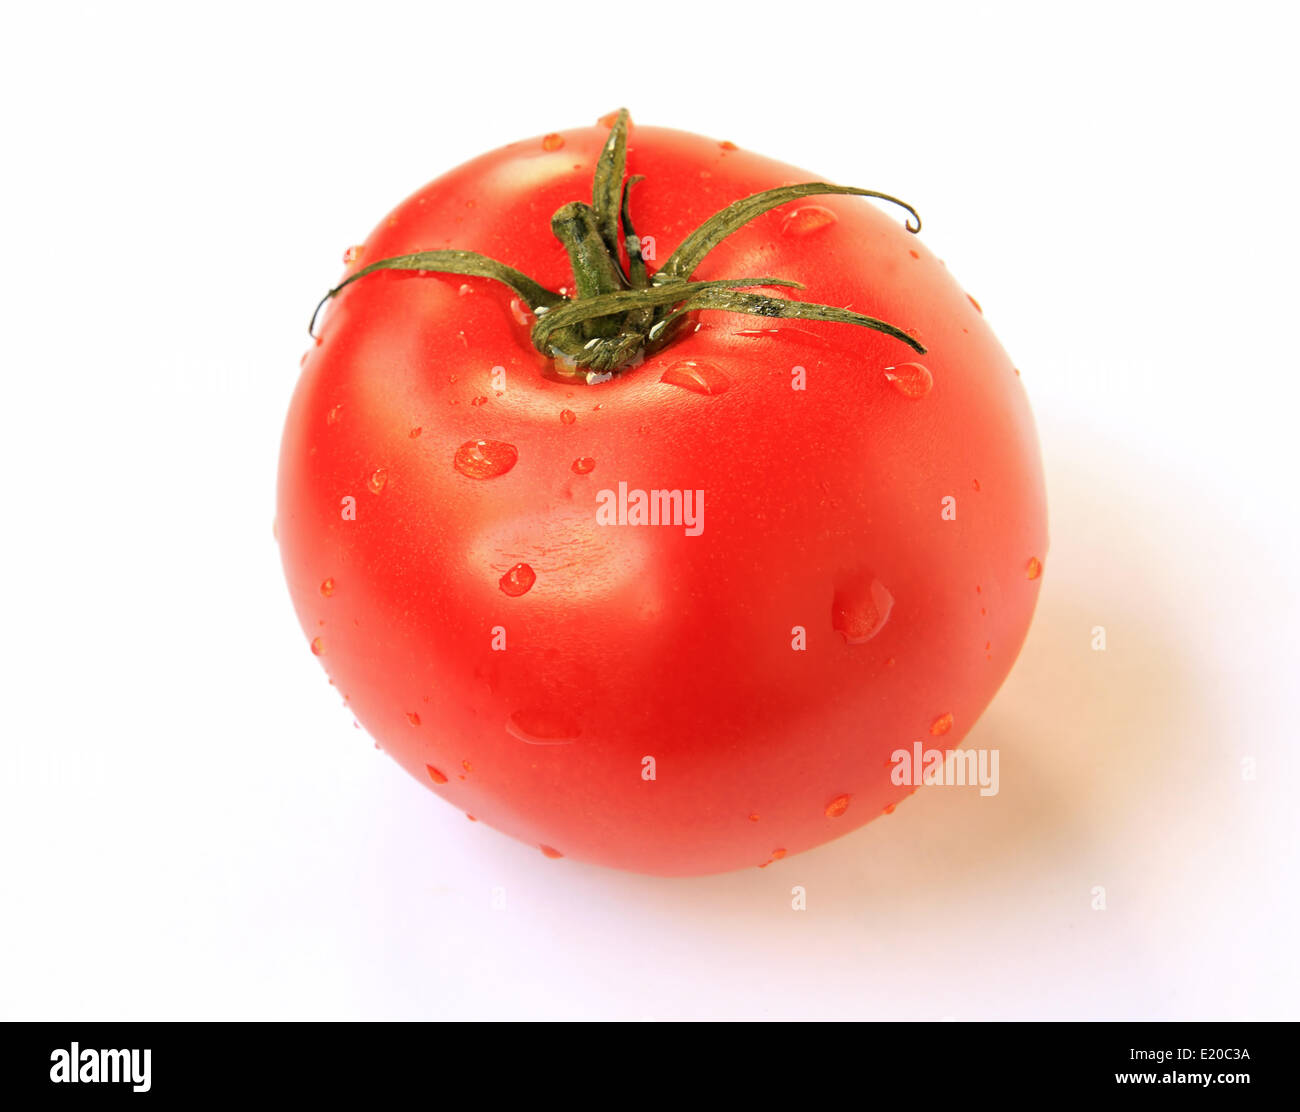 red tomato on white background Stock Photo